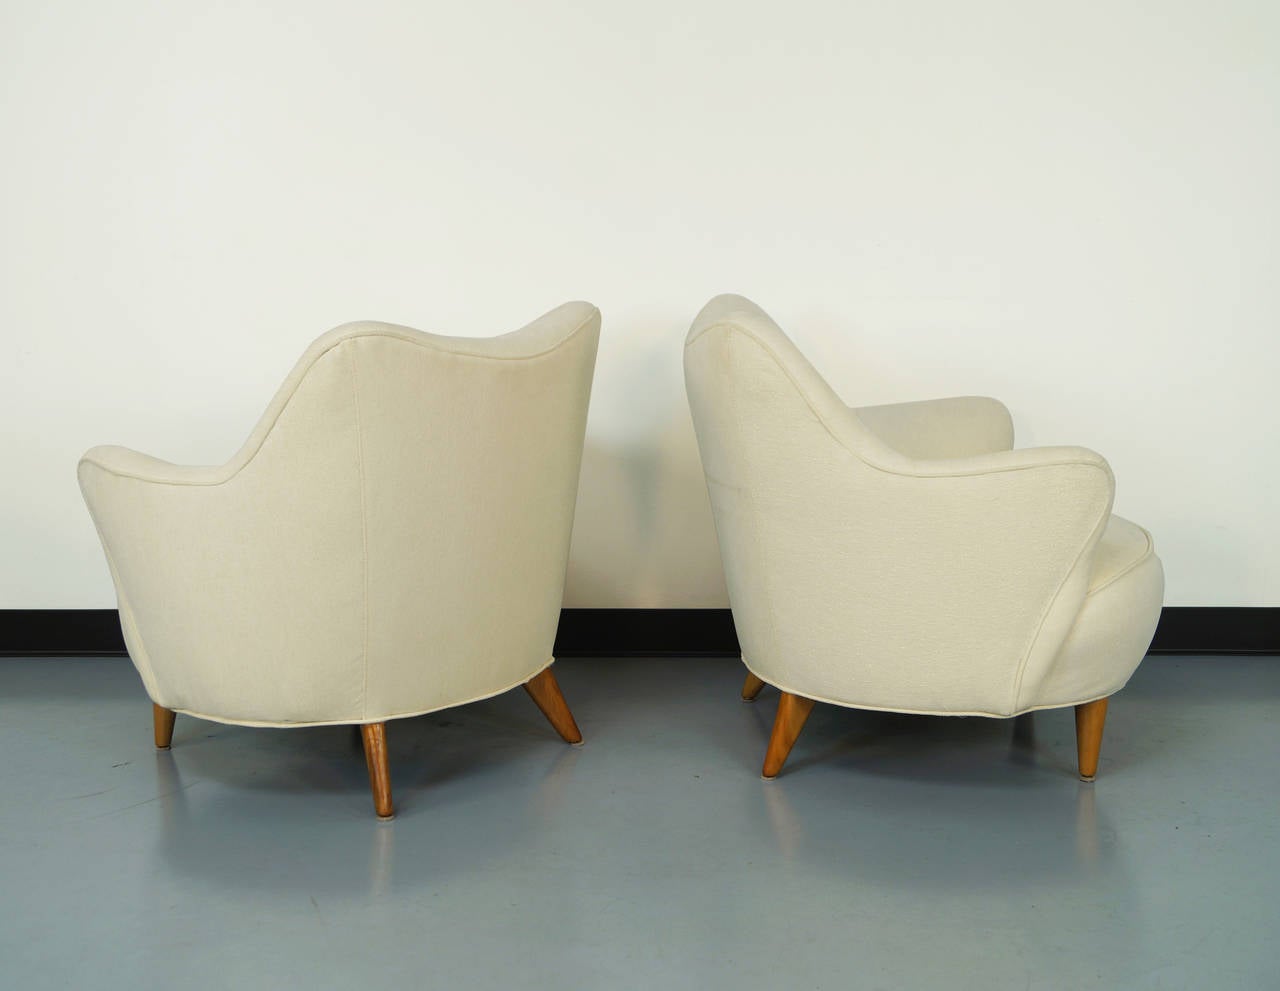 Stunning pair of vintage barrel lounge chairs designed by Vladimir Kagan.

Literature: The Complete Kagan: A Life of Avant-Garde Design, Kagan, PPG 74-75.